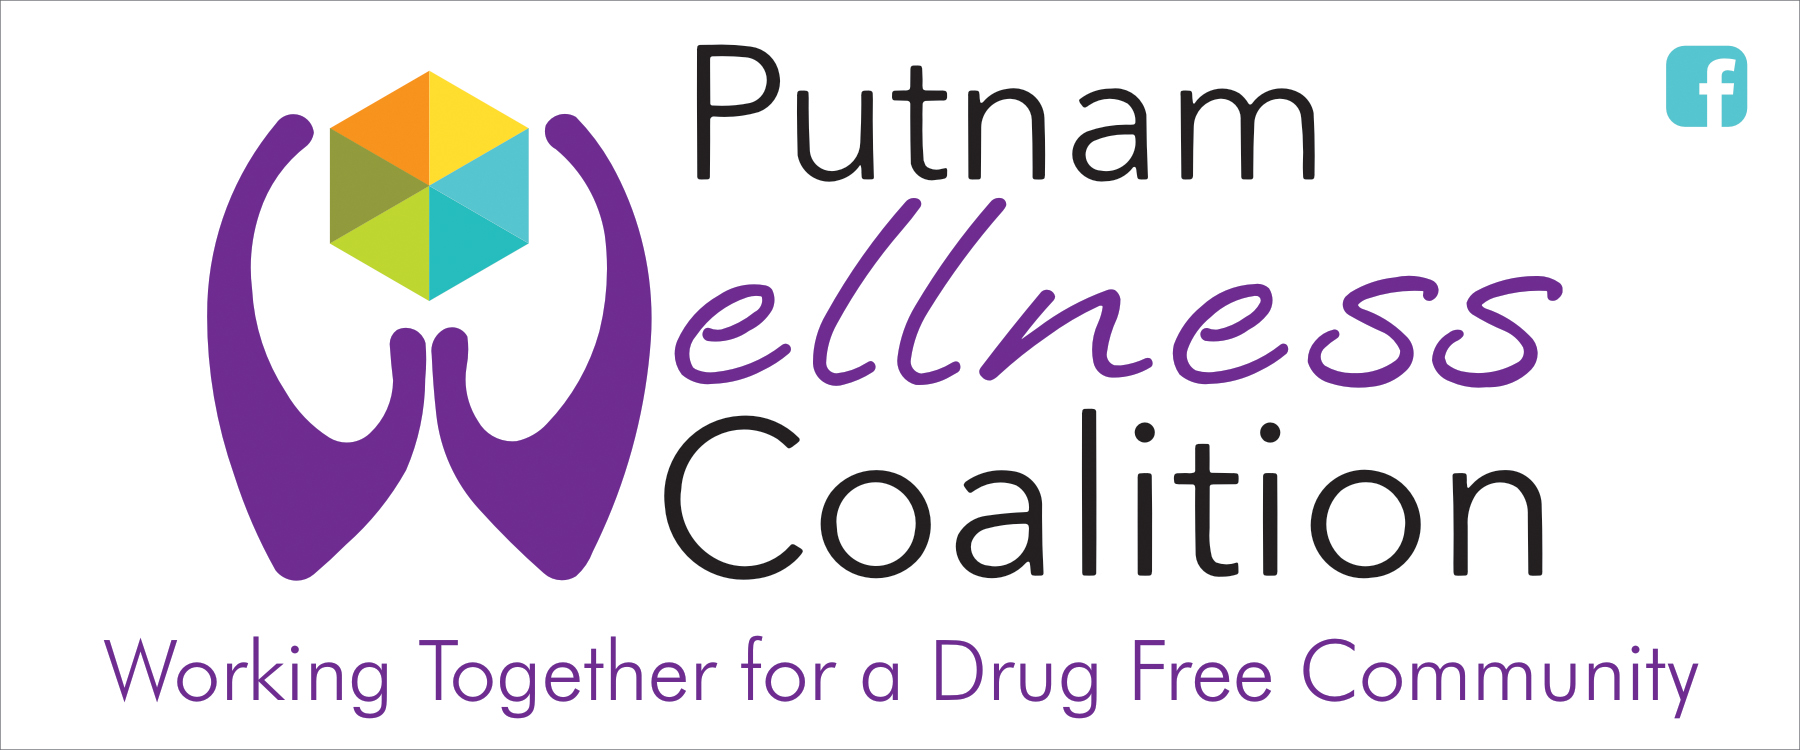 Putnam Wellness Coalition logo